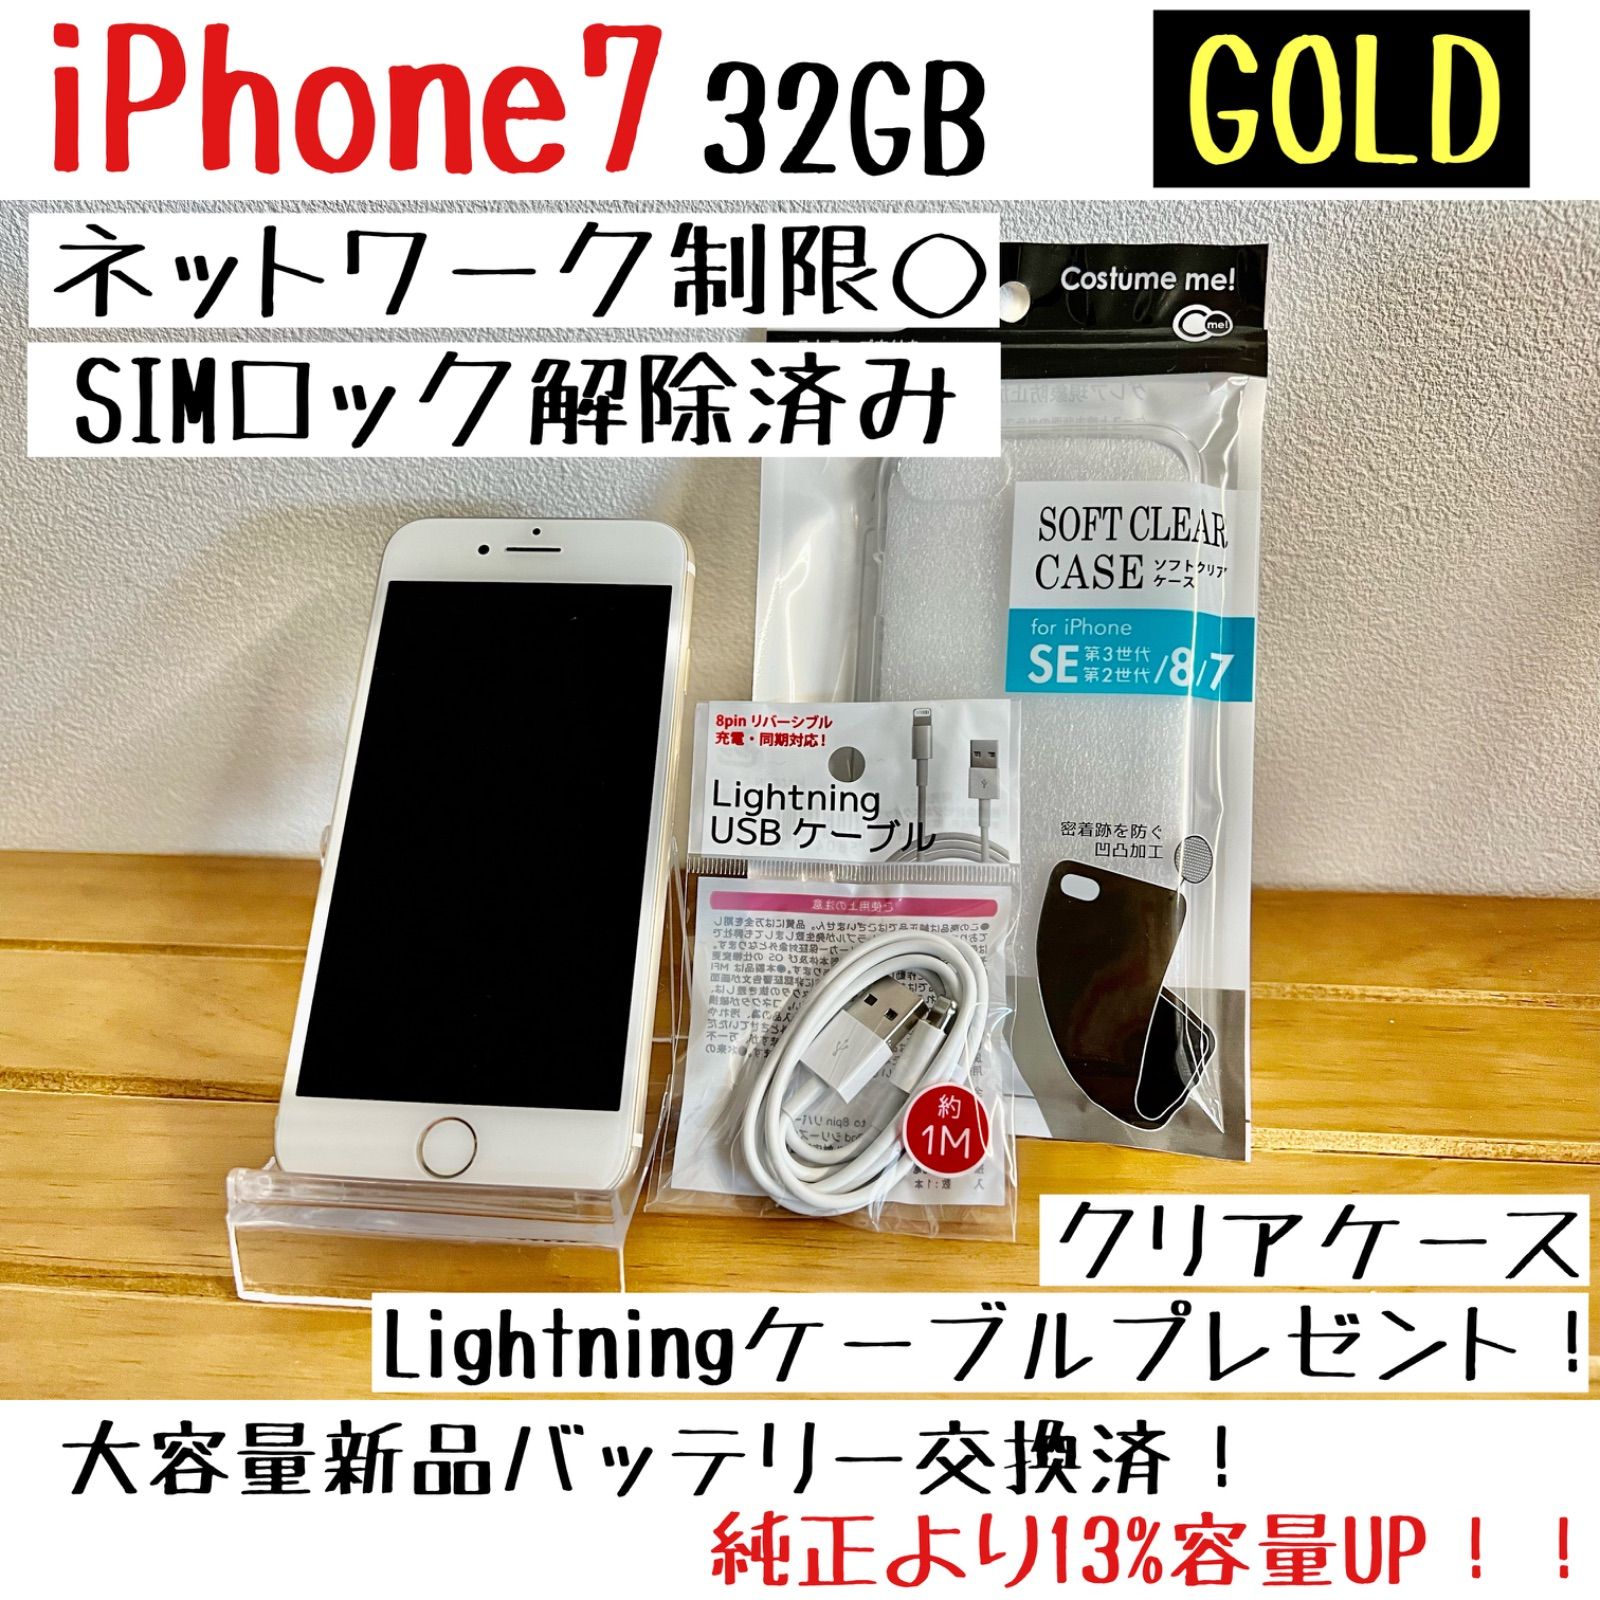 simロック解除済】iPhone 7 32GB ゴールド バッテリー交換済み!-